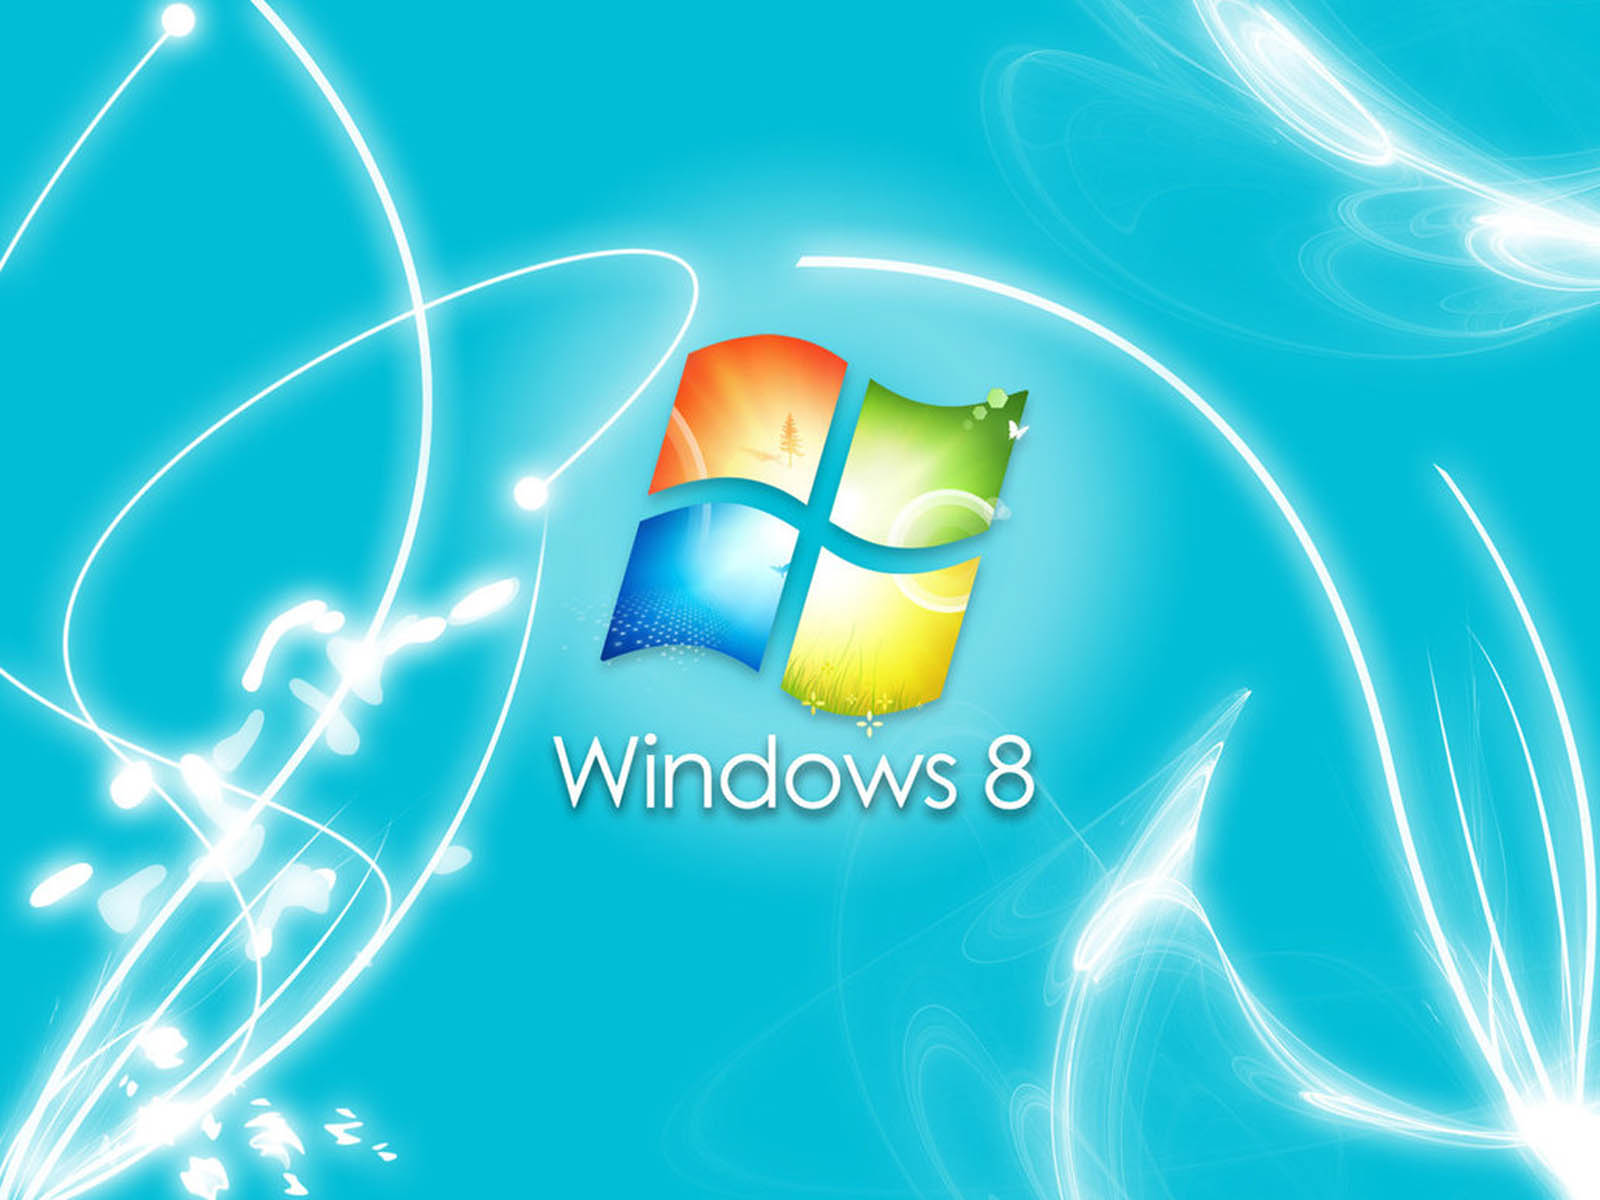 Gallery Mangklex Windows Desktop Wallpaper And Background